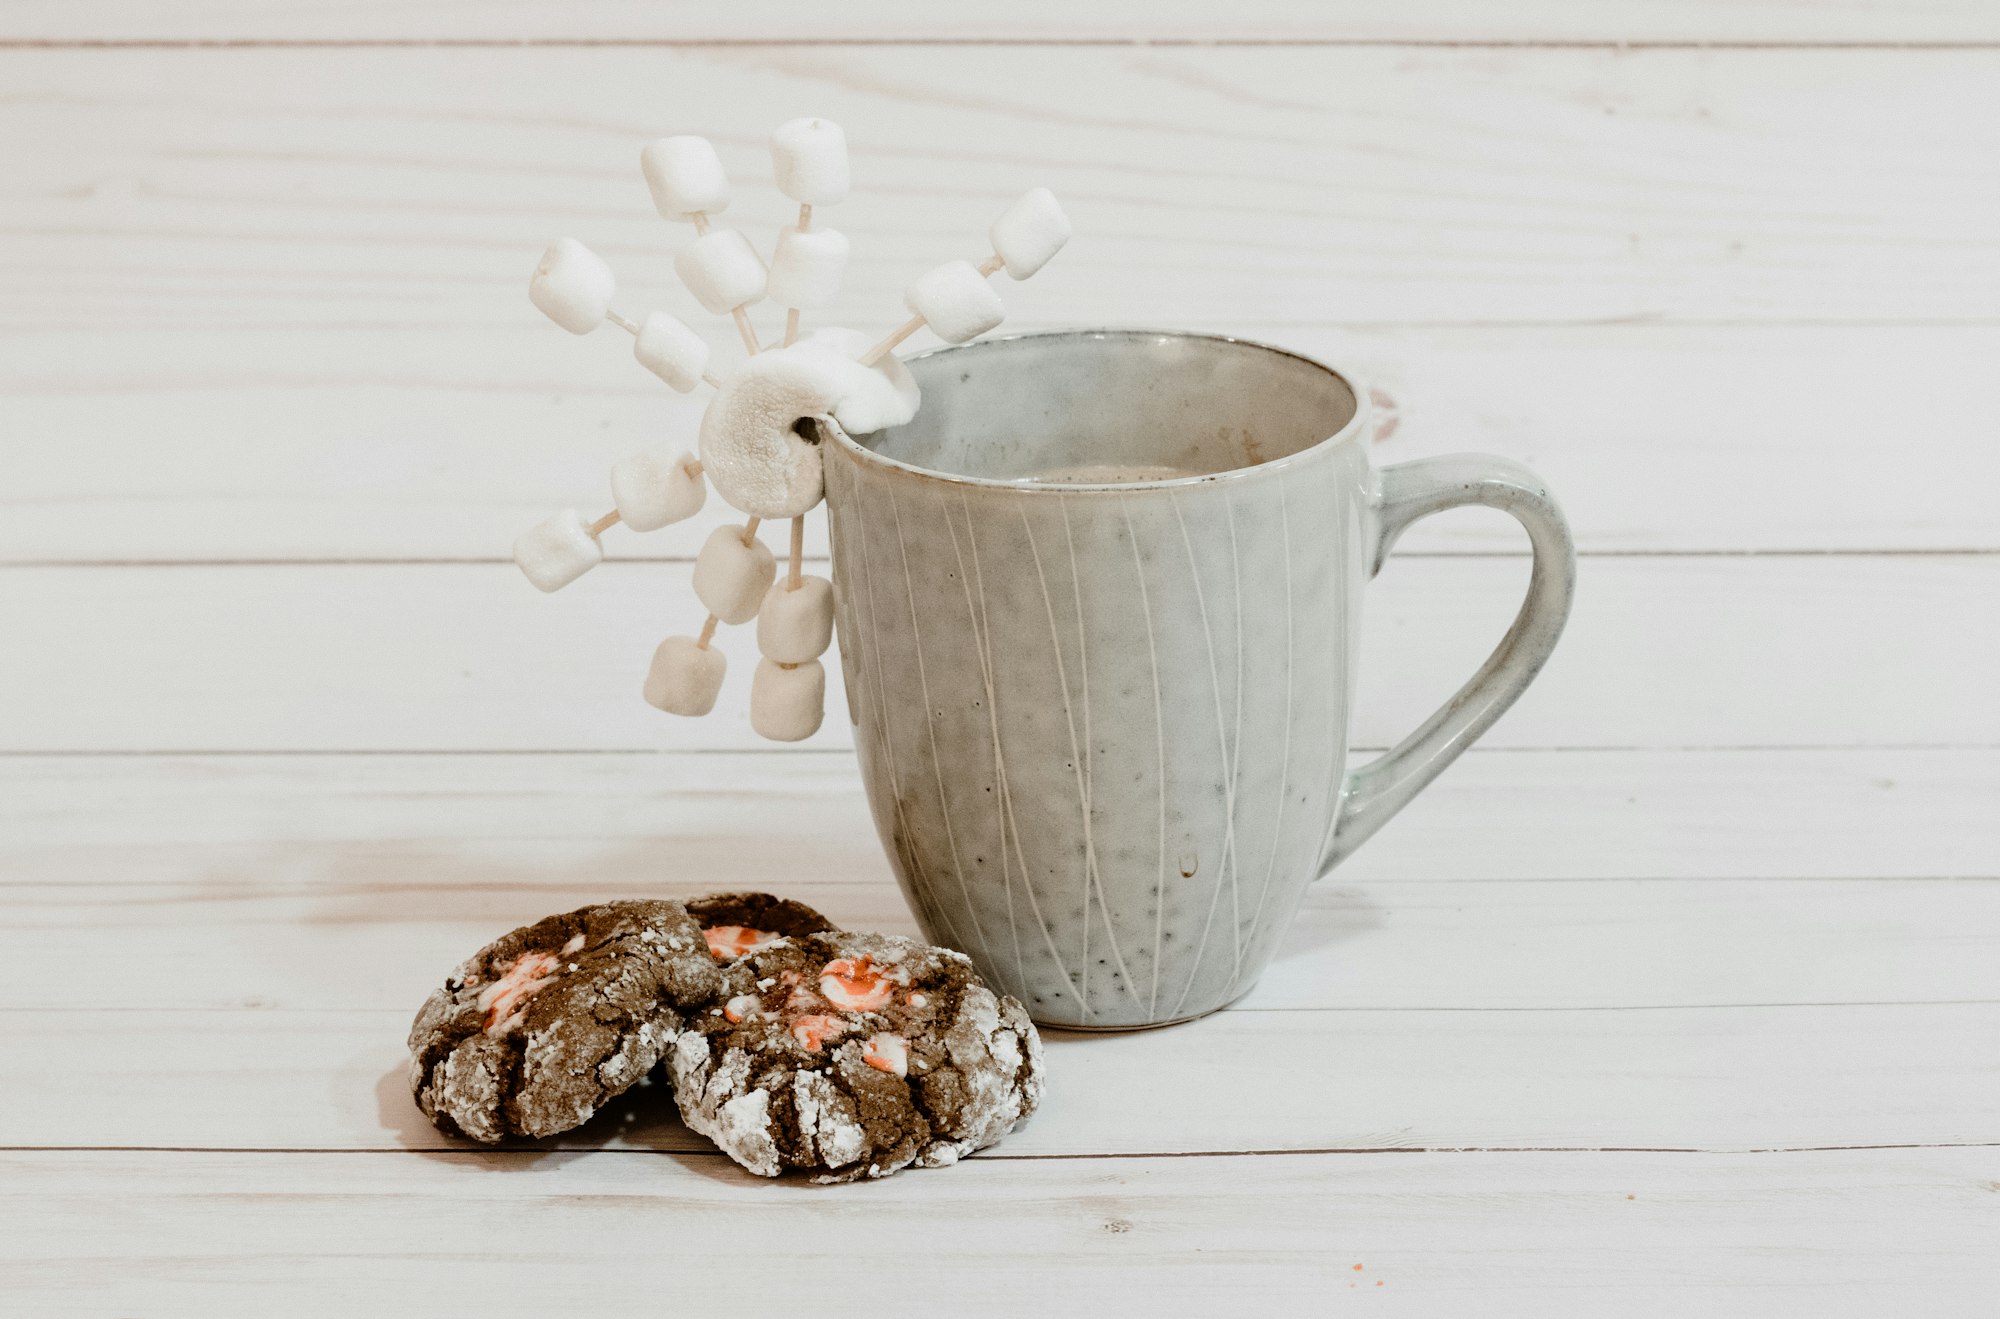 pepperment cookies and a gray ceramic mug 